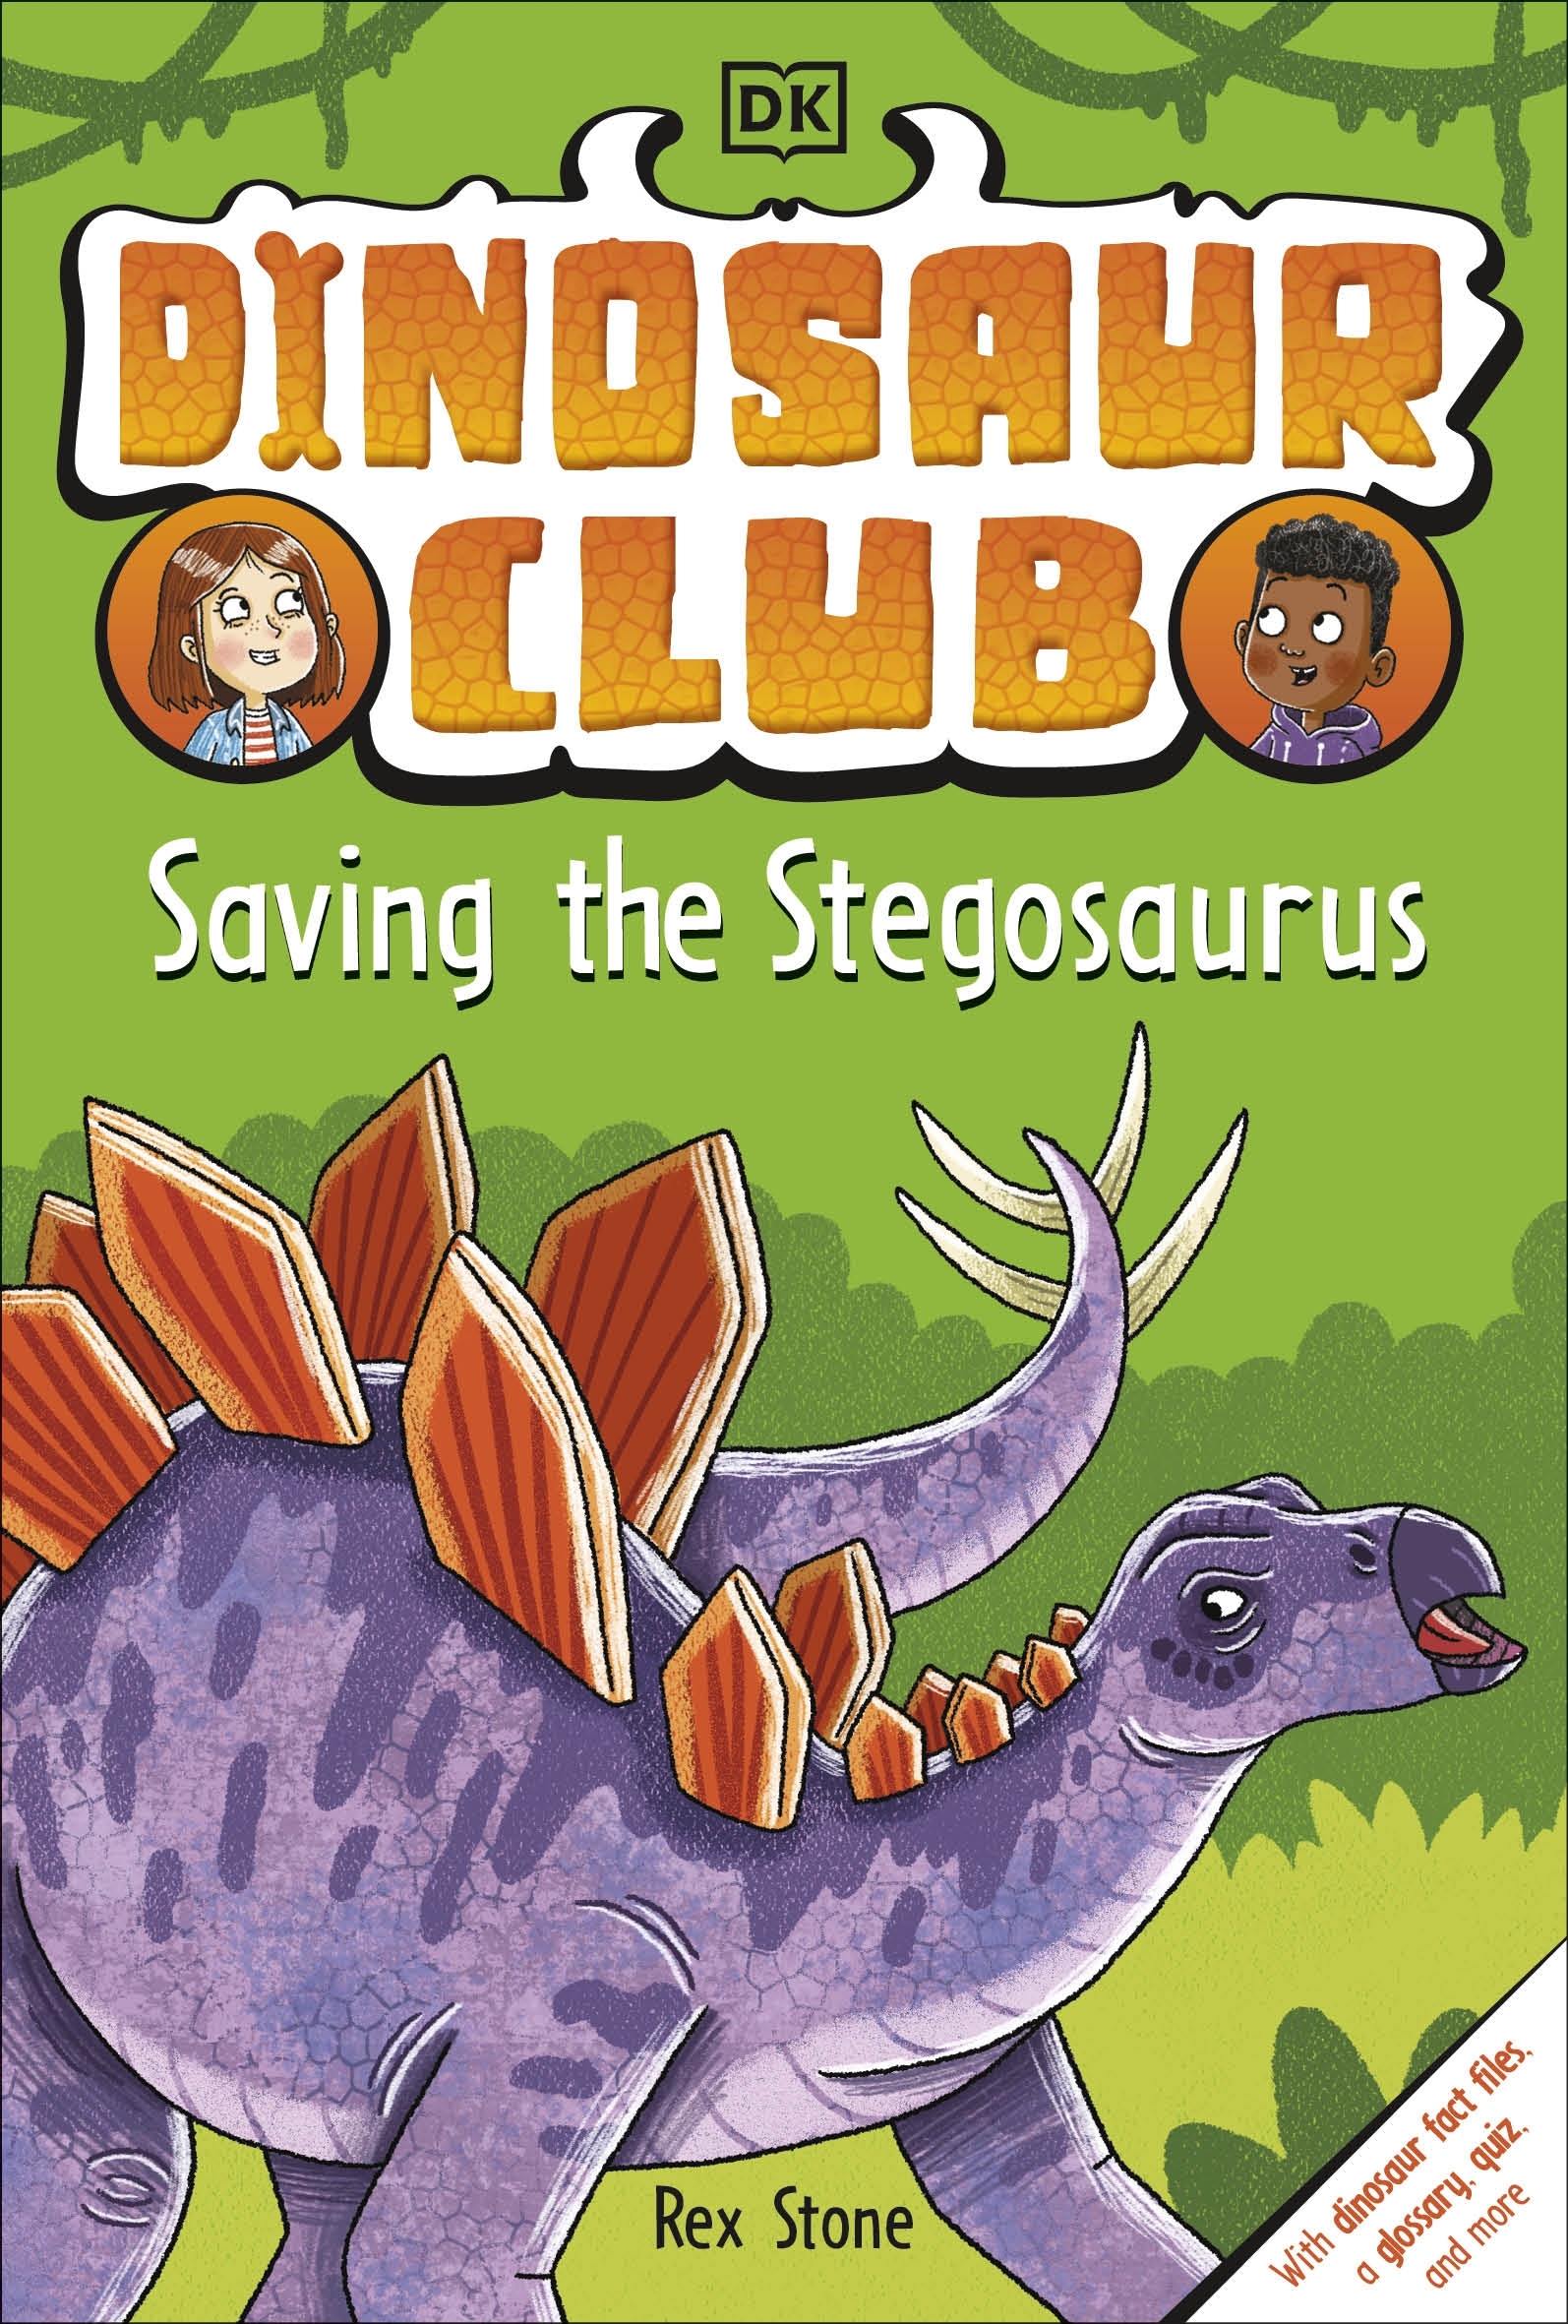 Dinosaur Club: Saving the Stegosaurus by DK - Penguin Books New Zealand